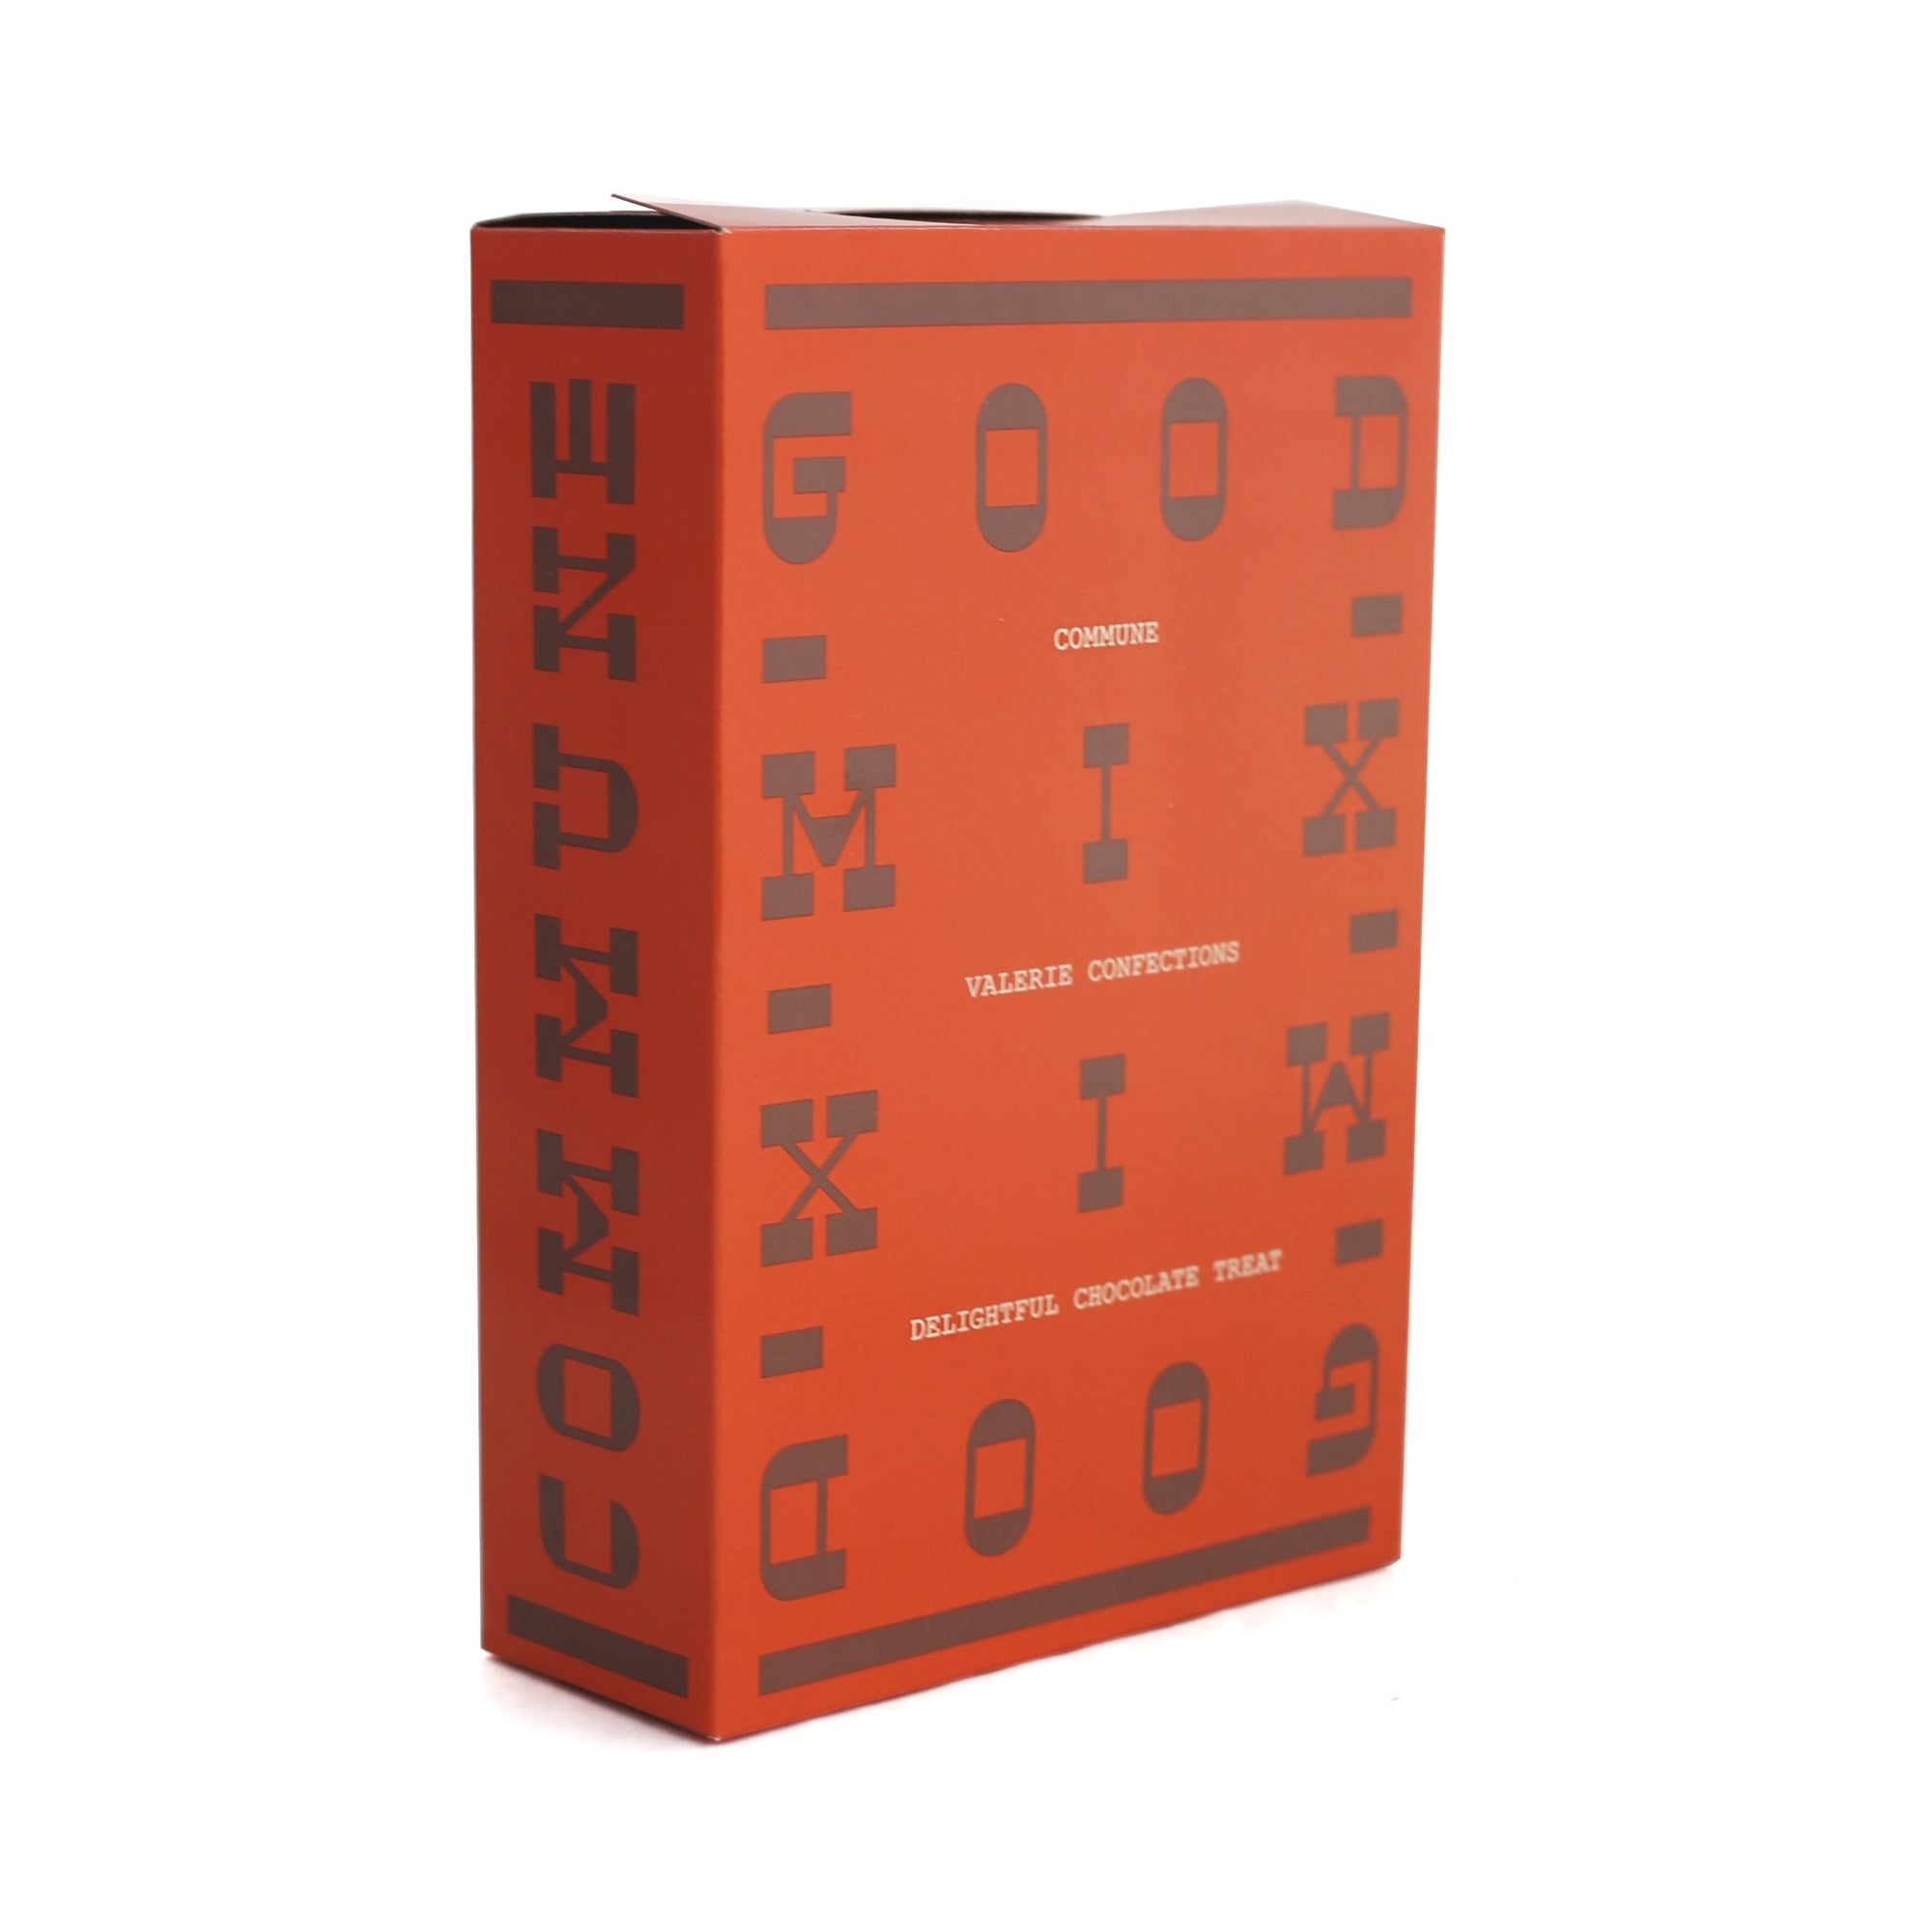 Rectangular orange box of GOOD MIX chocolate snack with dark brown blocky text design.